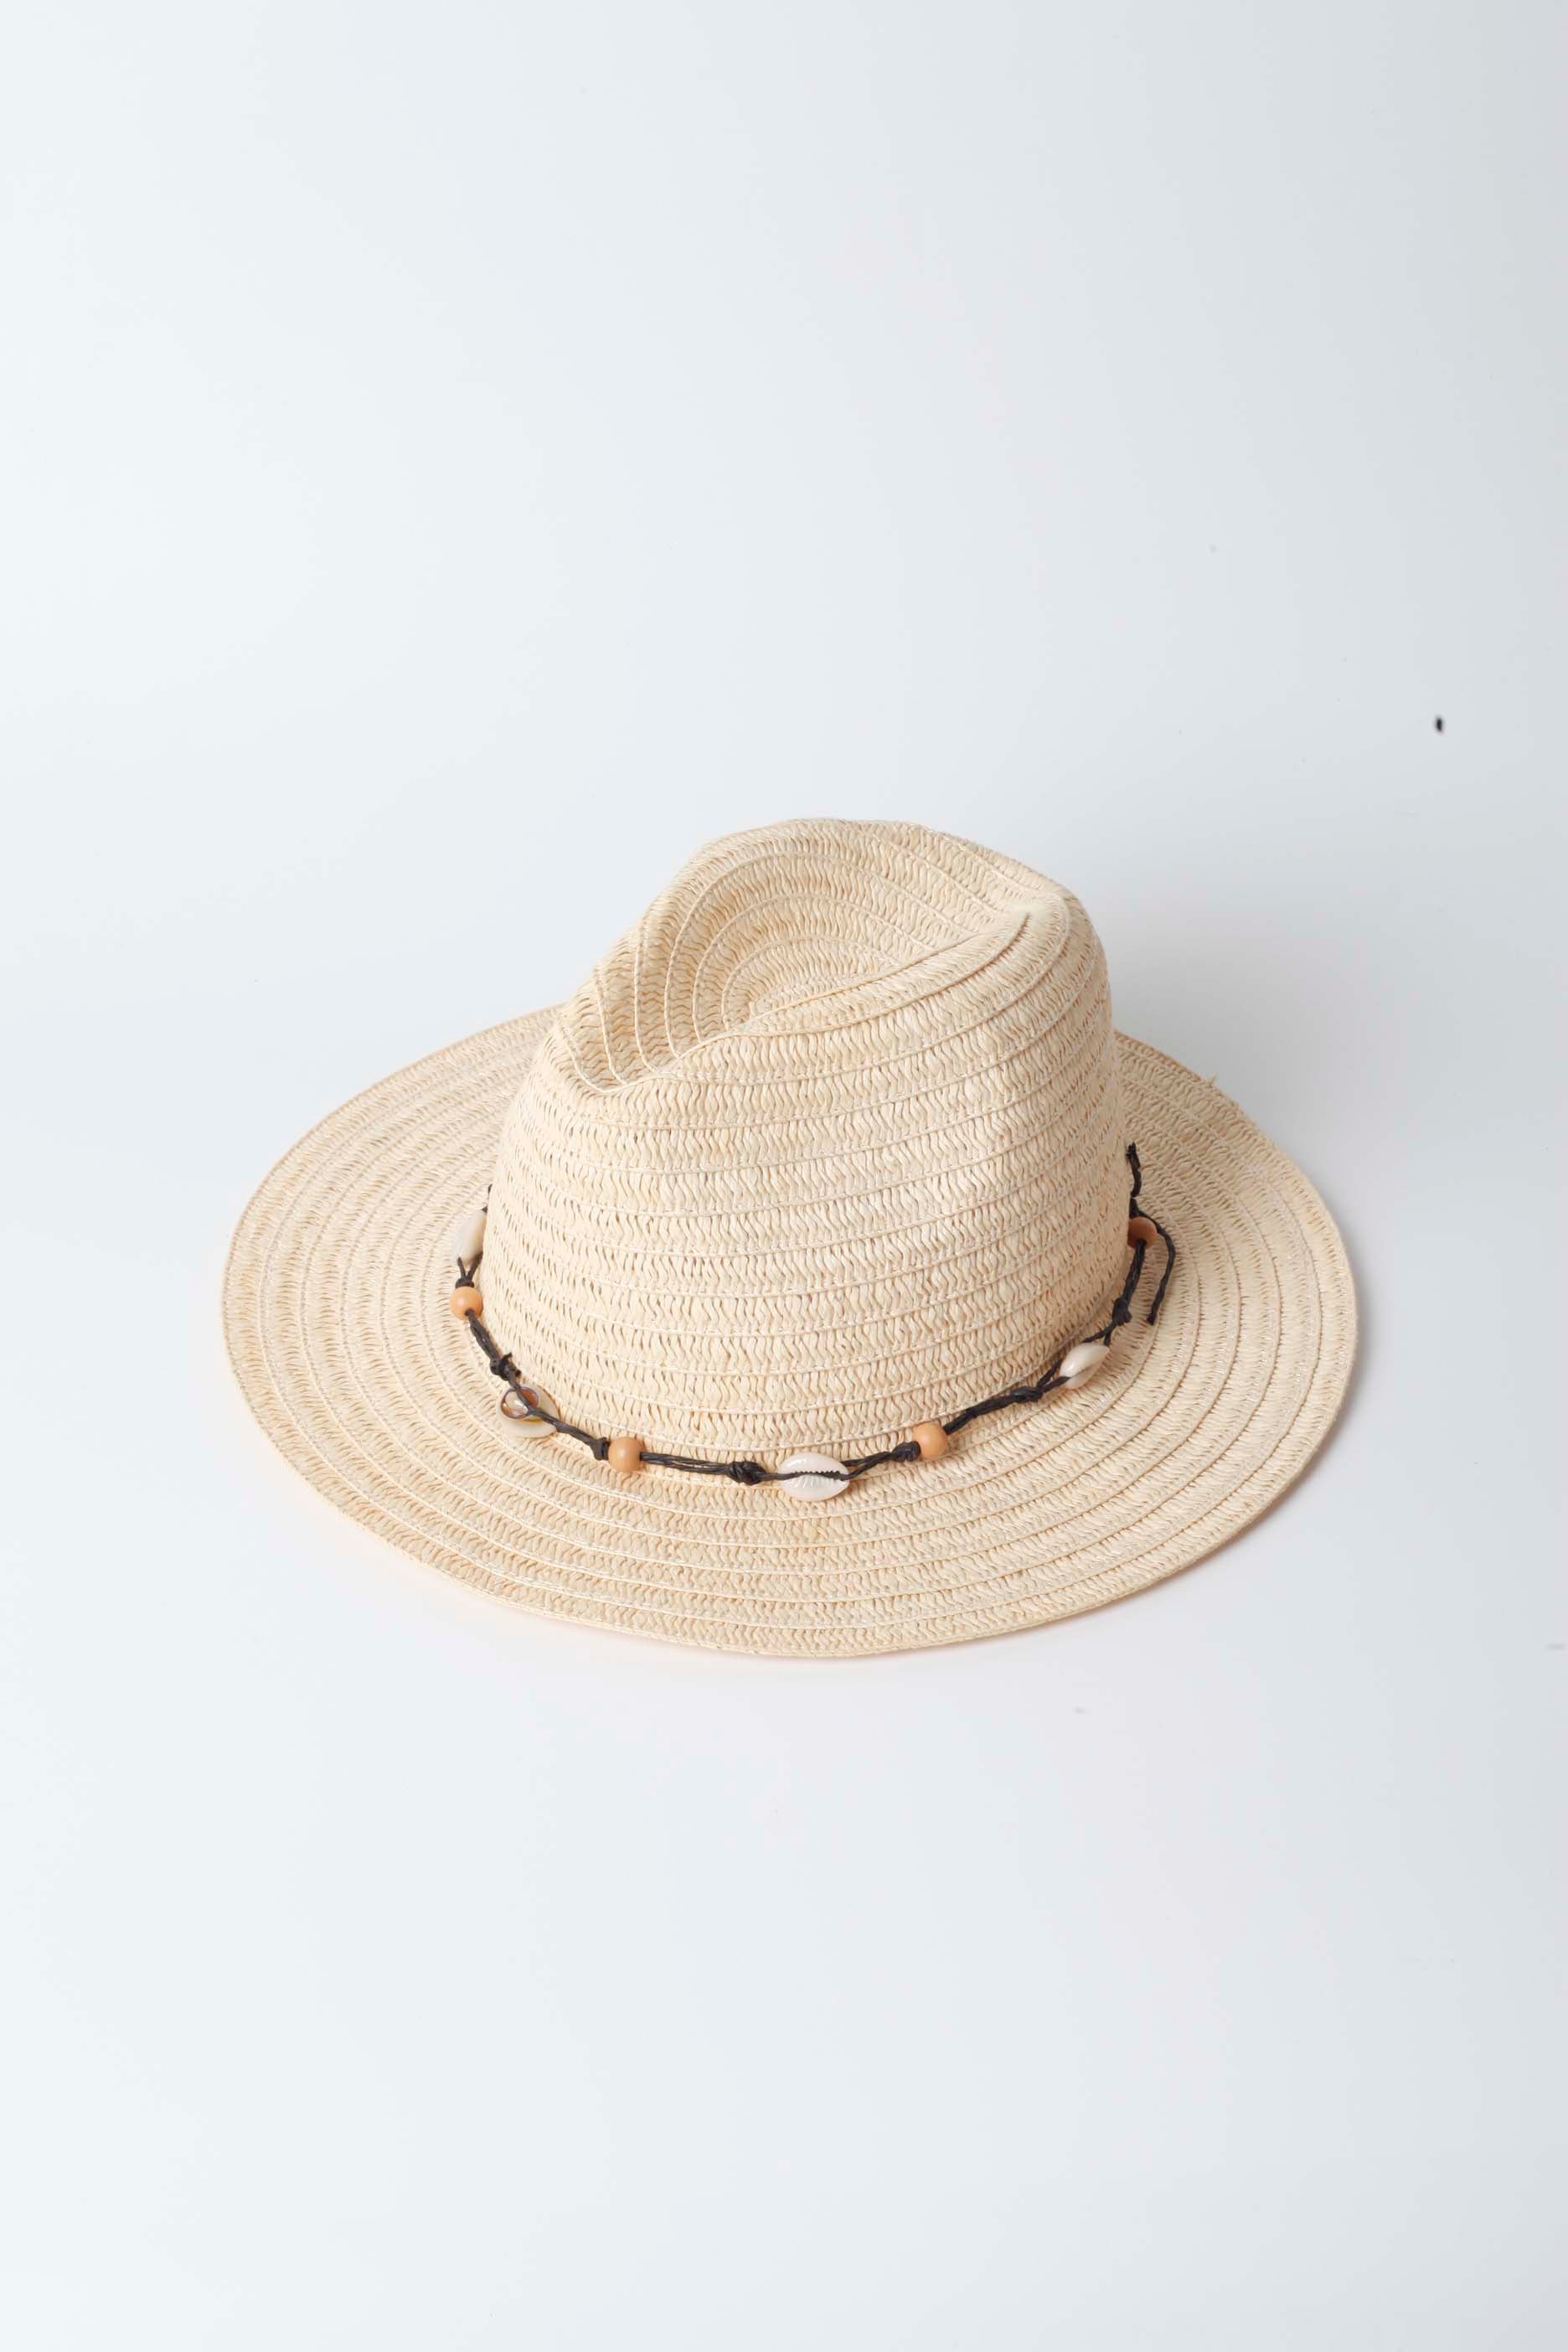 Straw Cowboy Hat with Shells